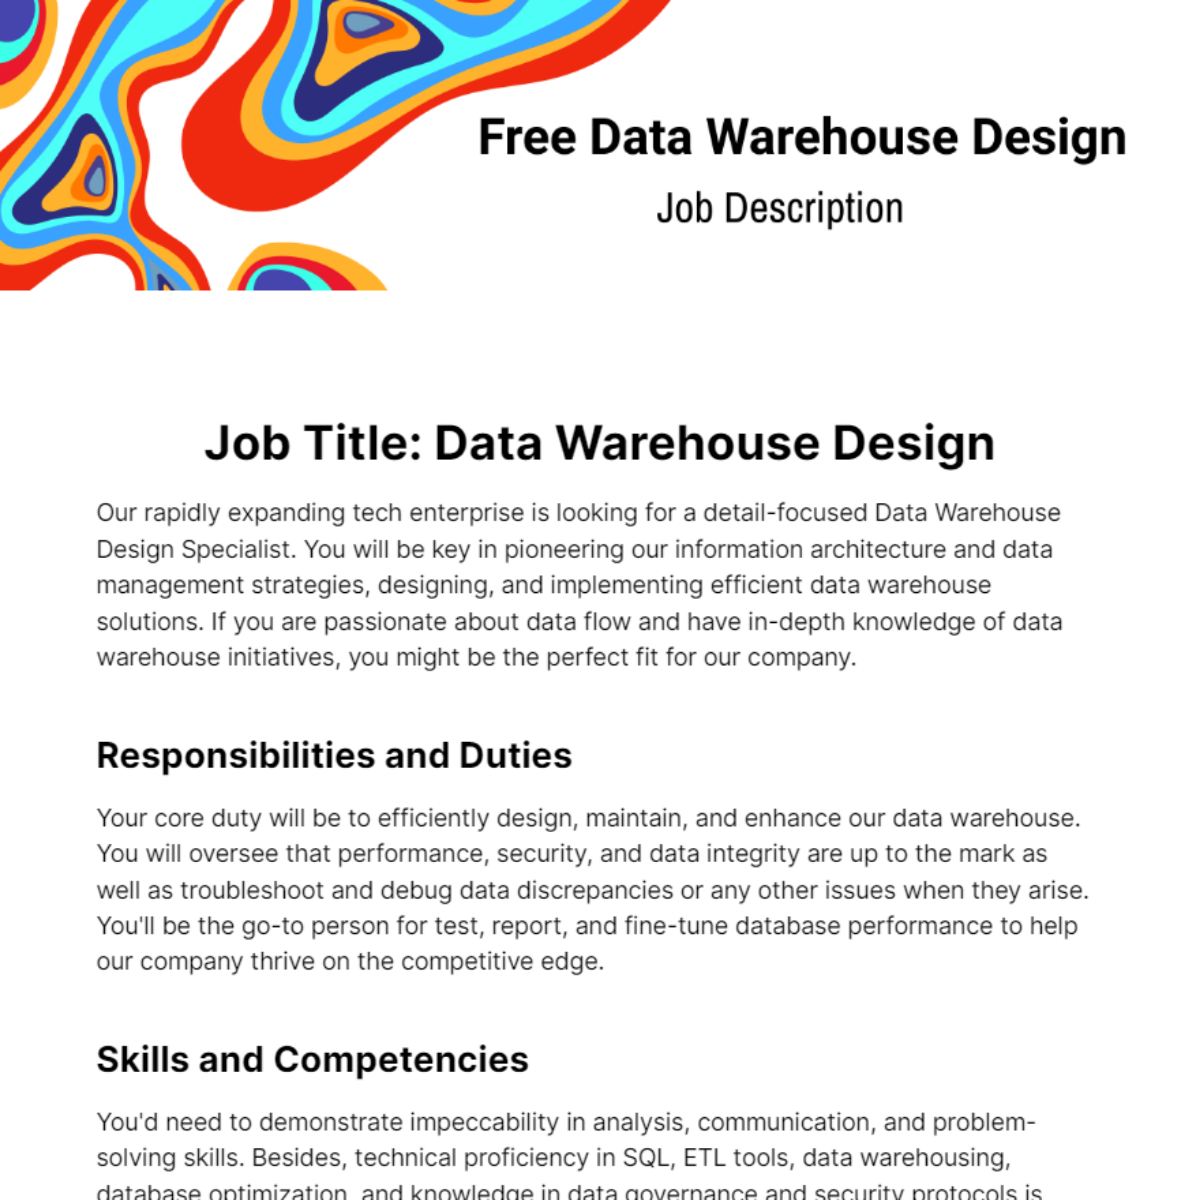 Free Data Warehouse Design Job Description Template